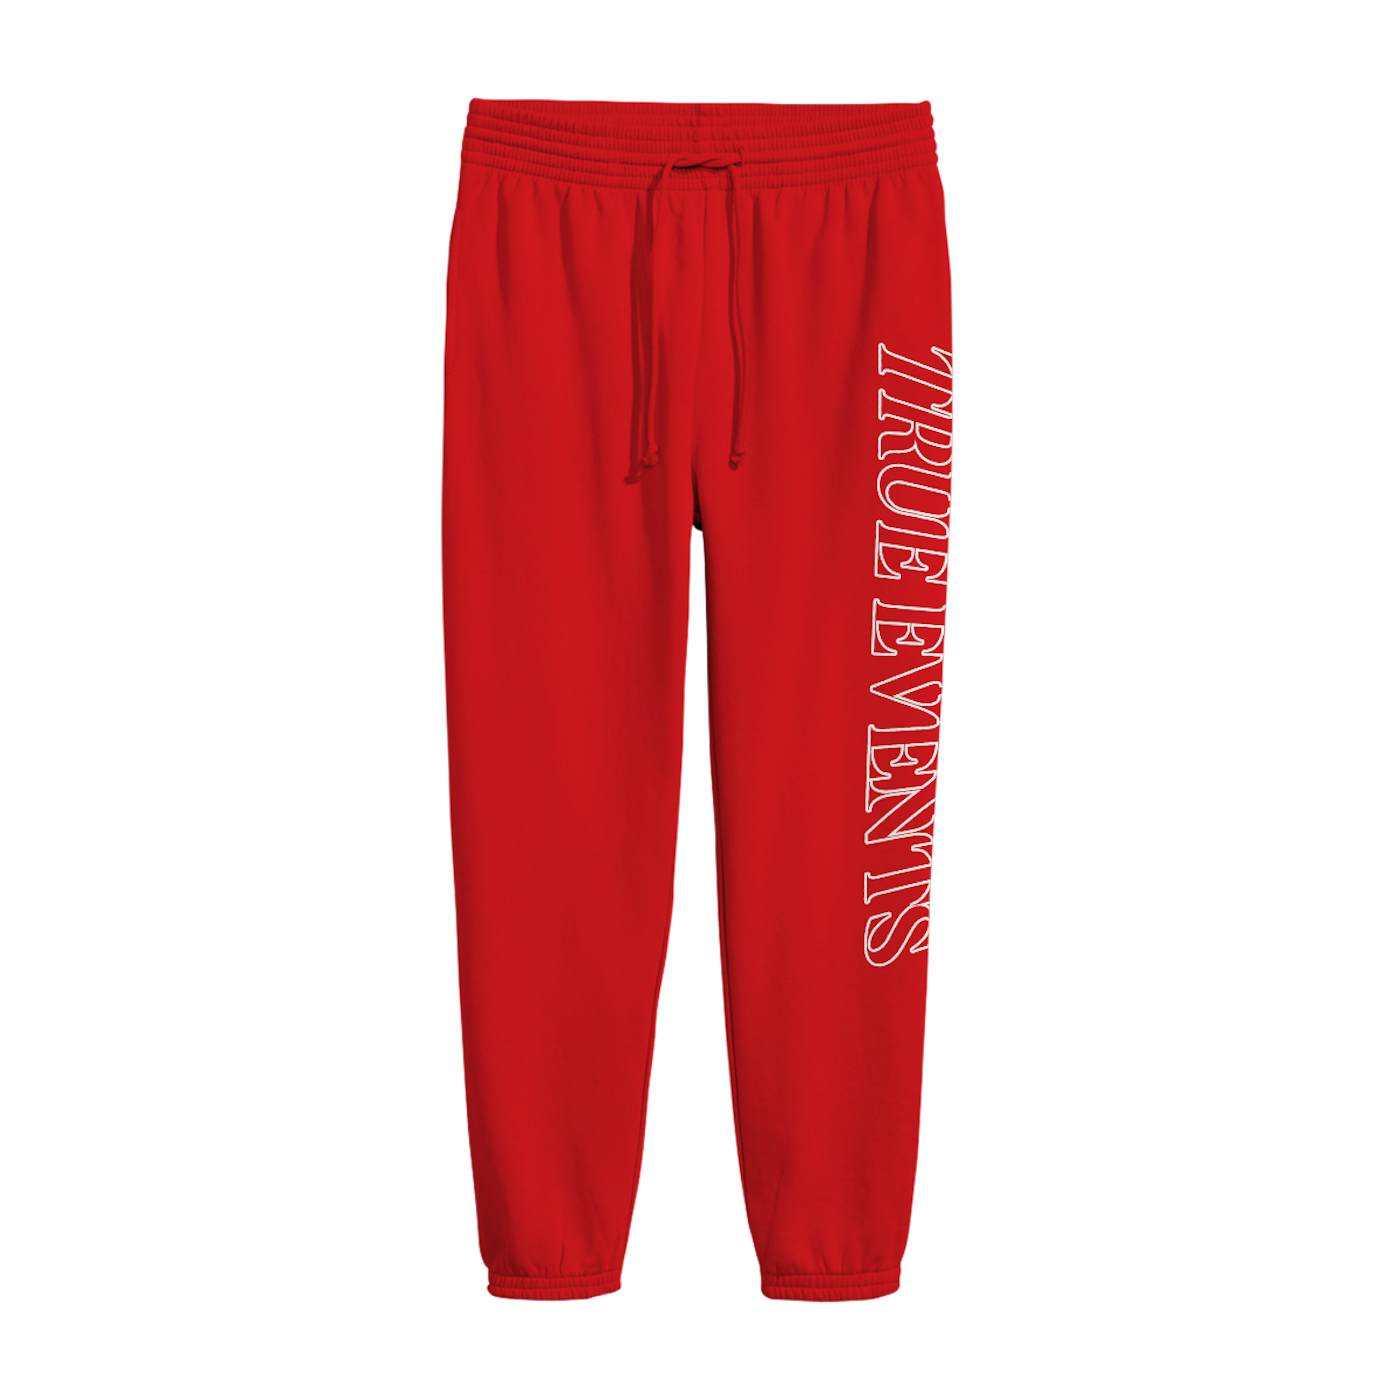 Tori Kelly Inspired Logo Red Sweatpants